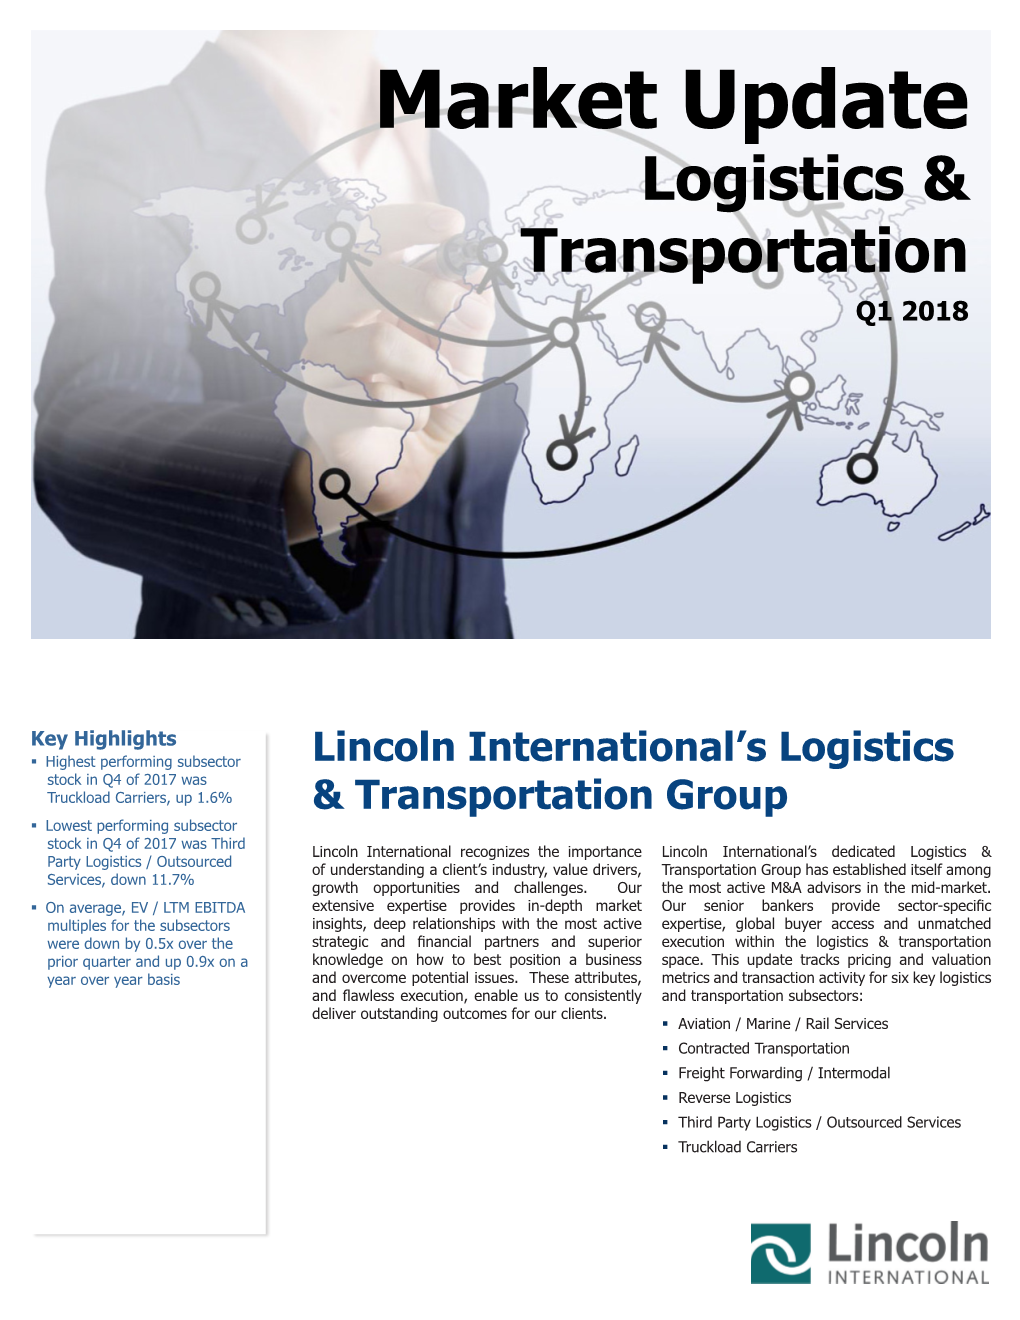 Market Update Logistics & Transportation Q1 2018